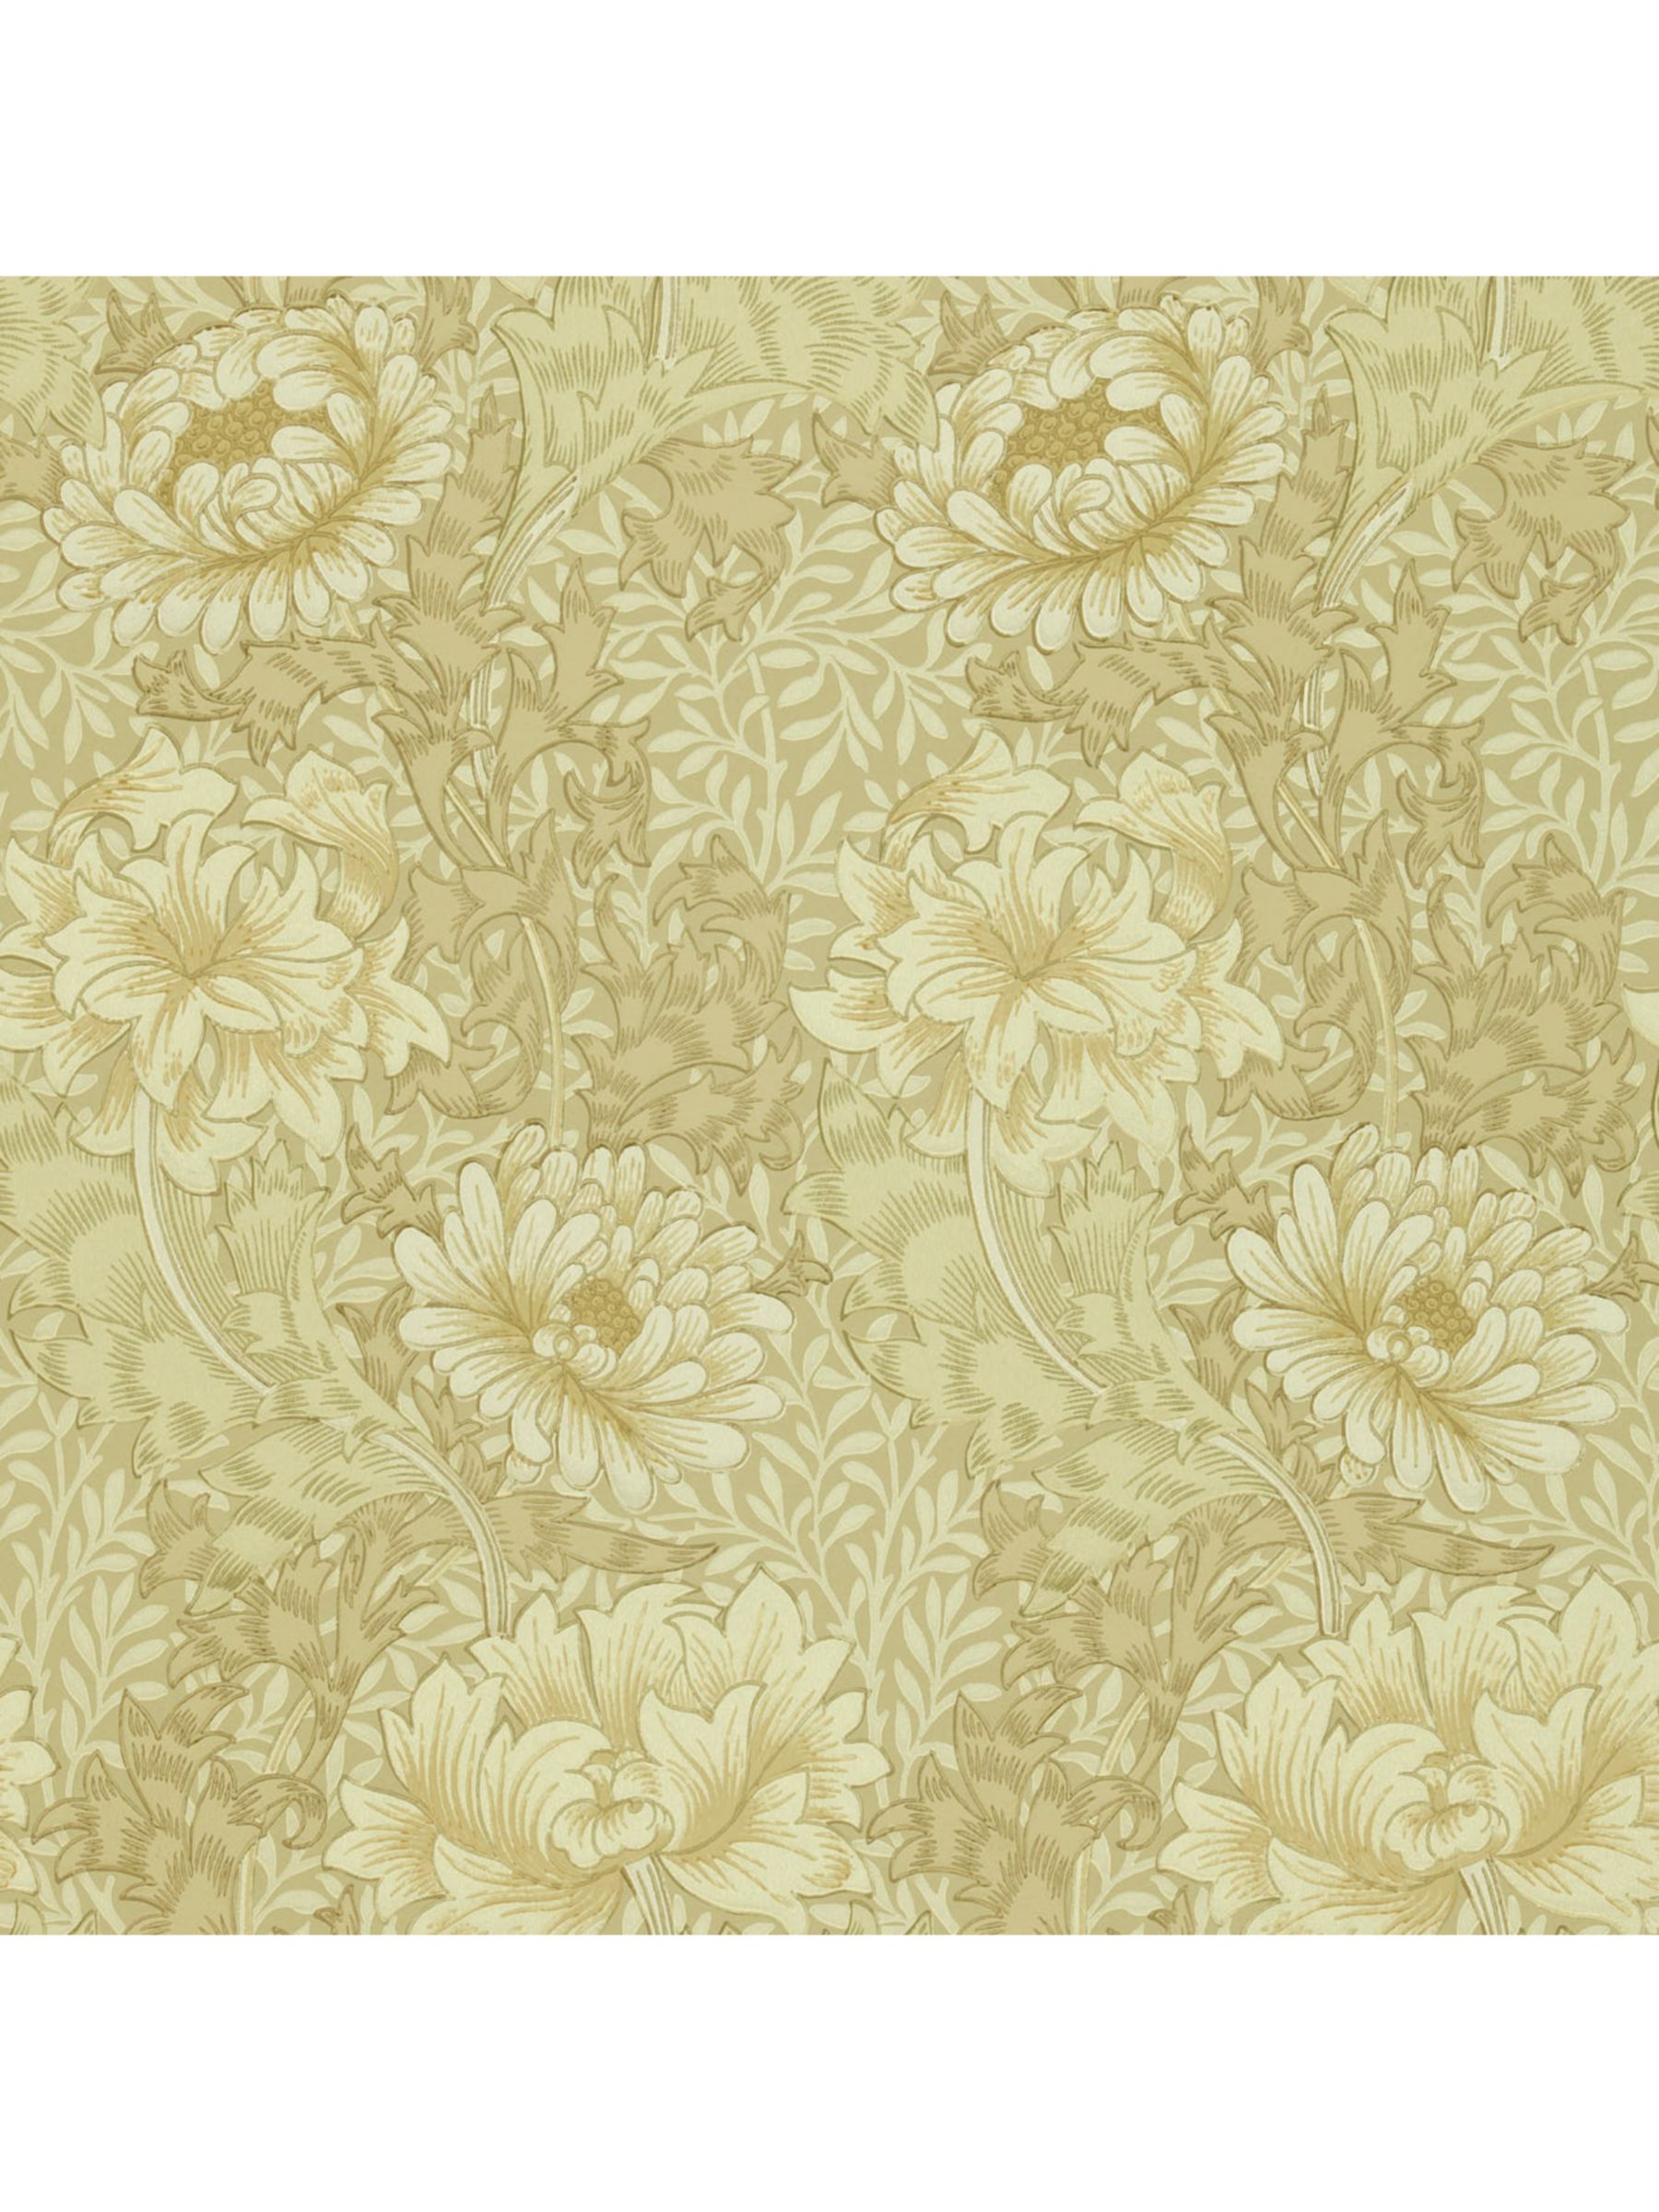 Morris & Co.Chrysanthemum Wallpaper, Ivory / Canvas, DMCW210419